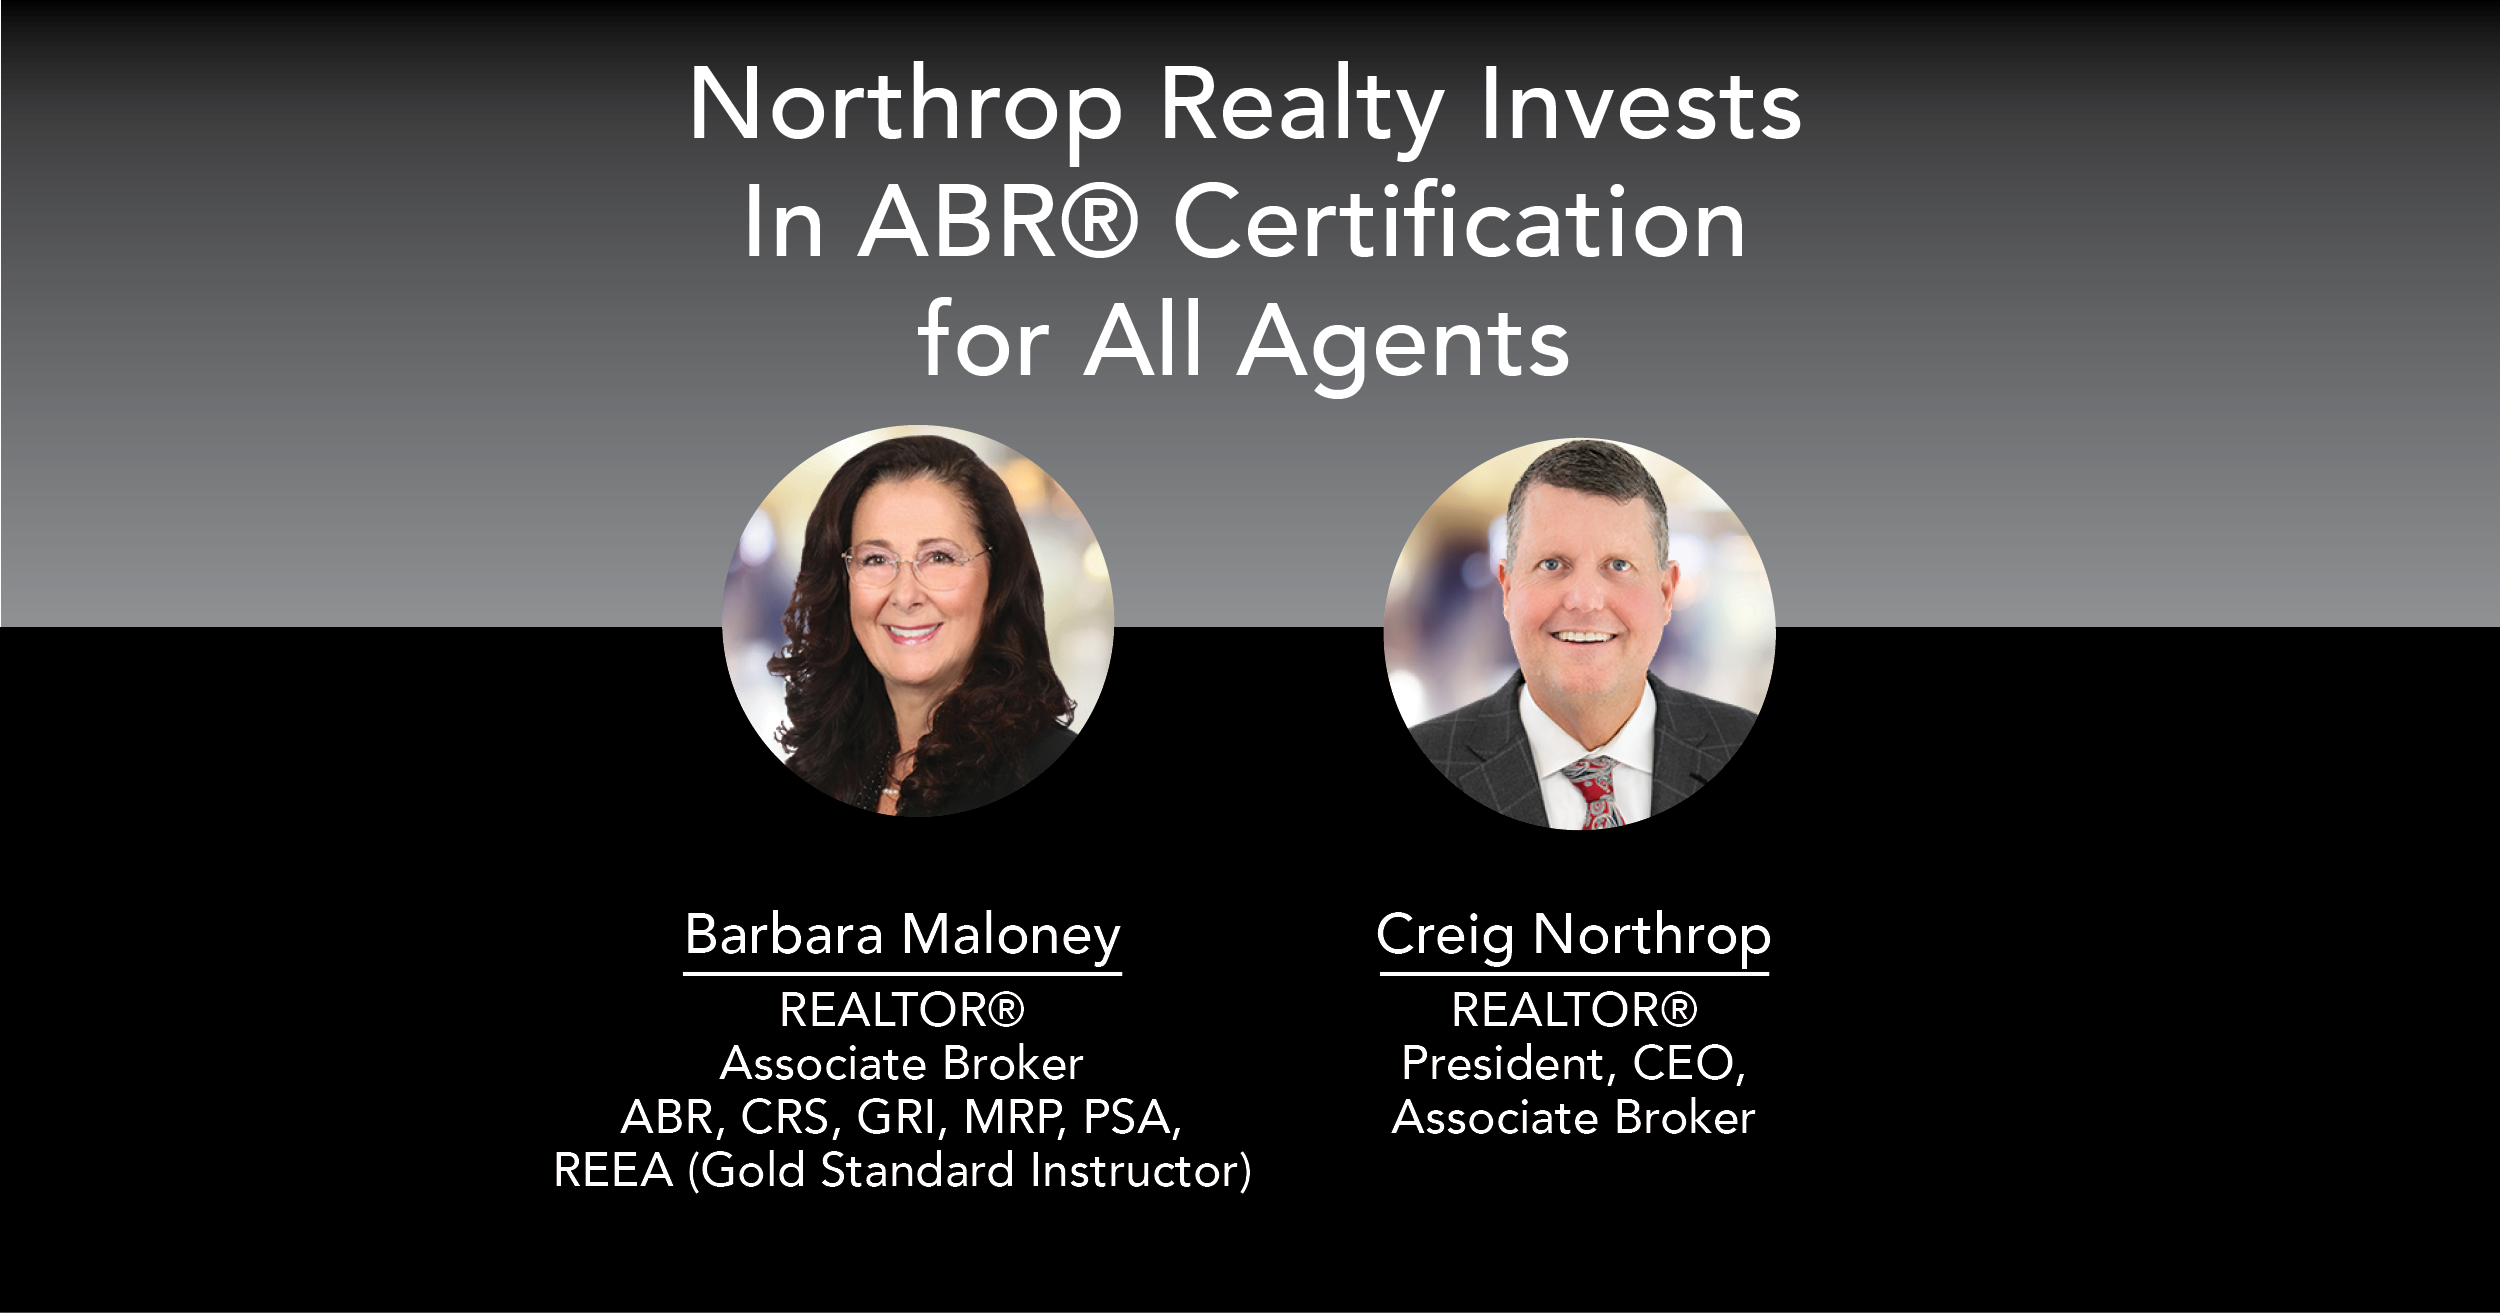 Barbara Maloney and Creig Northrop Headshots for Accredited Buyer Representative training press release.